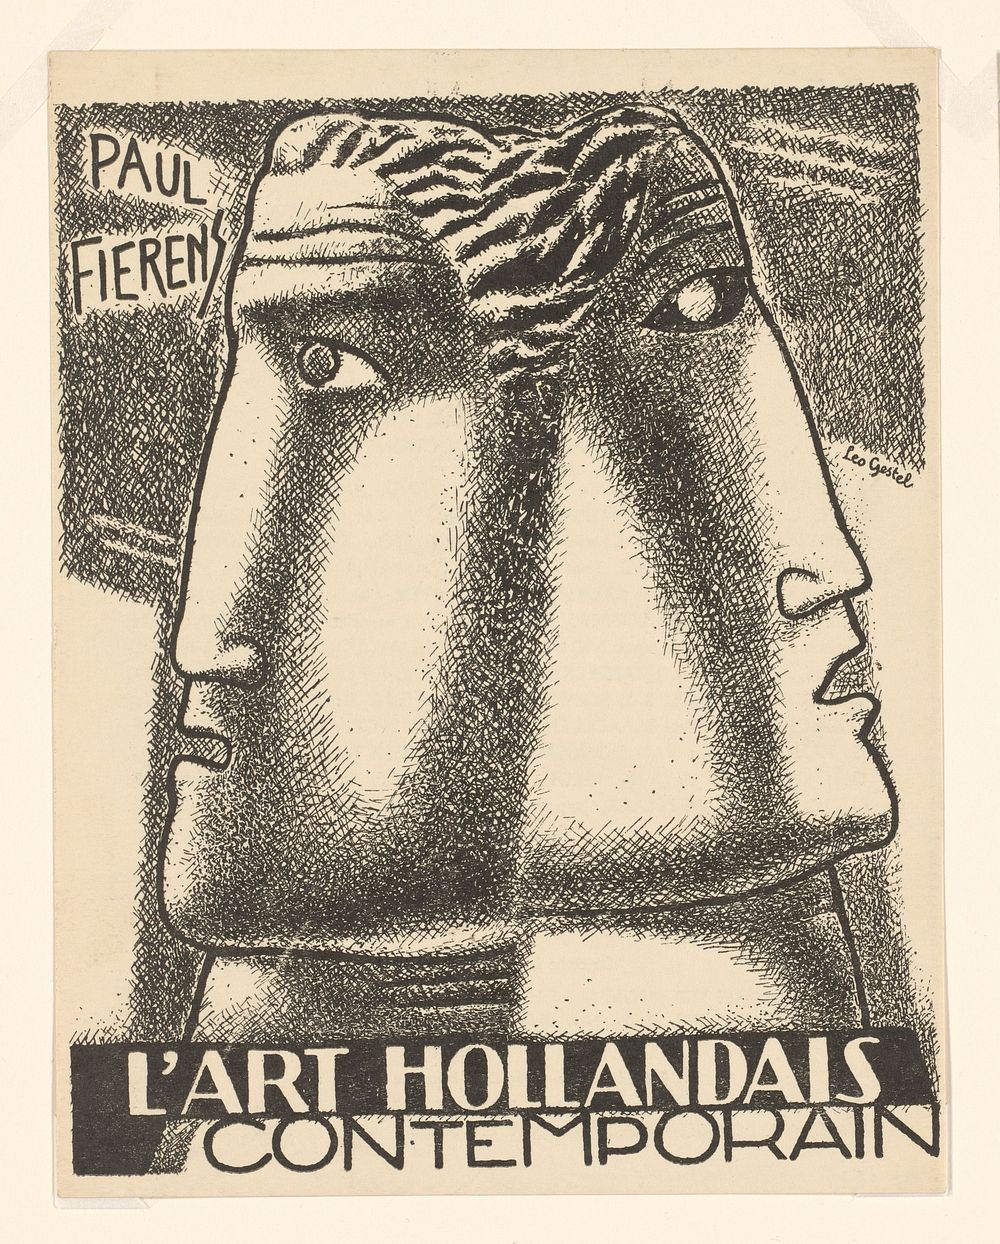 Reproductieprent boekomslag  "l'Art Hollandais contemporain" van Paul Fierens (1933) by Leo Gestel